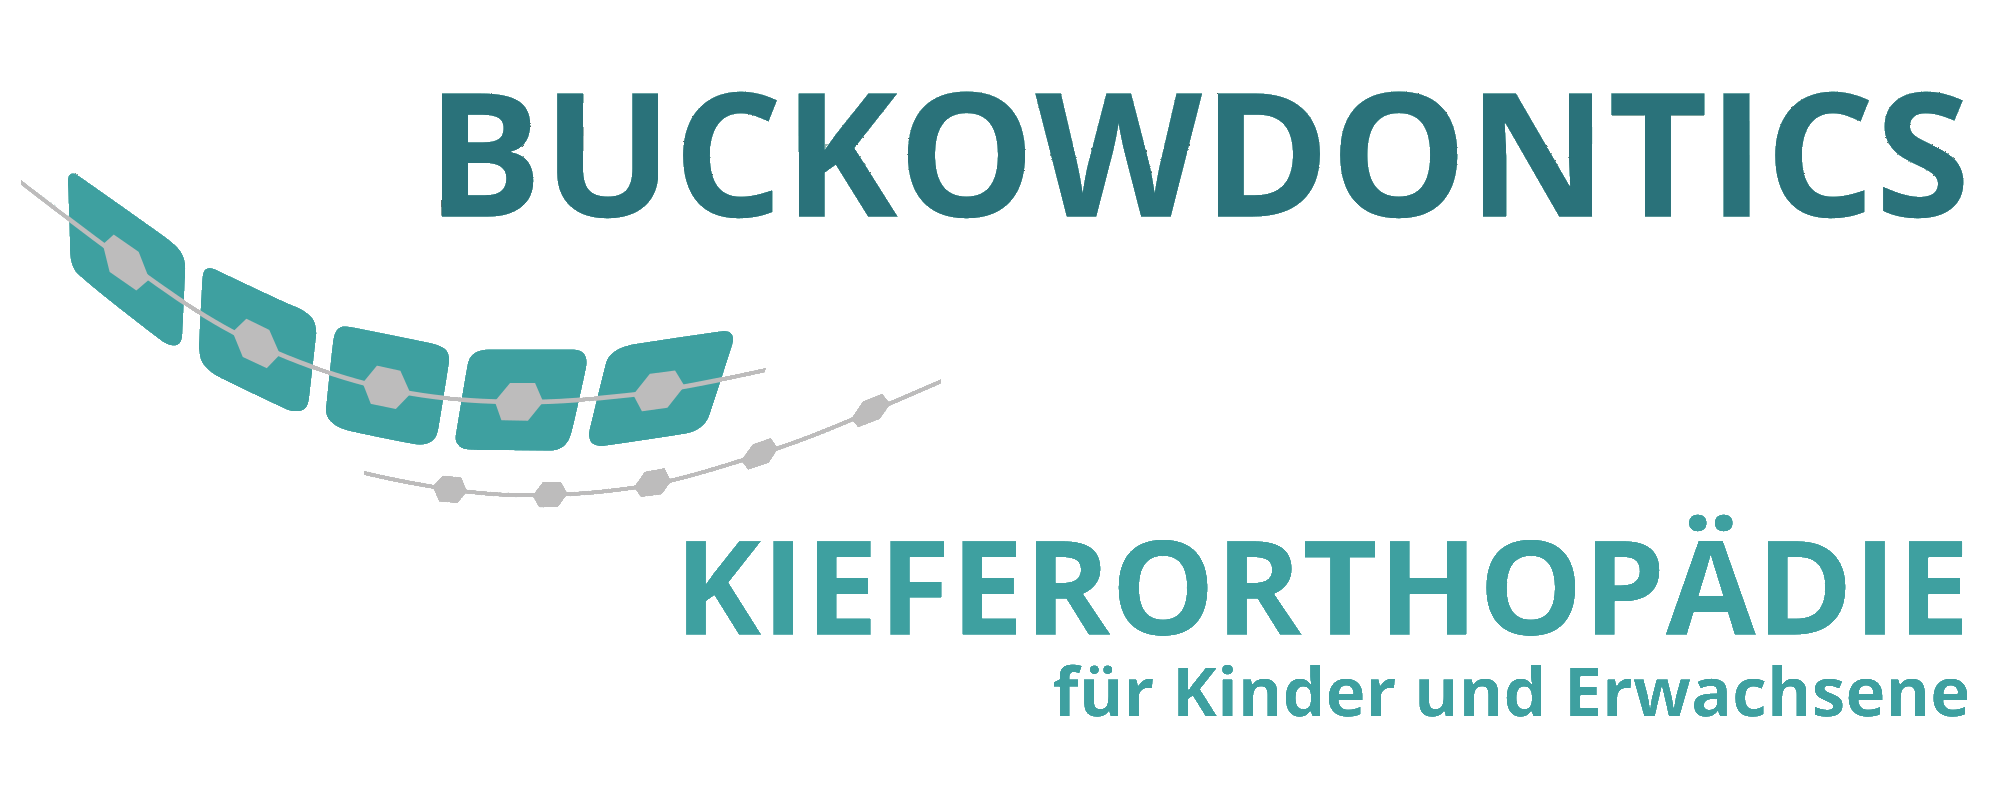 Logo Buckowdontics